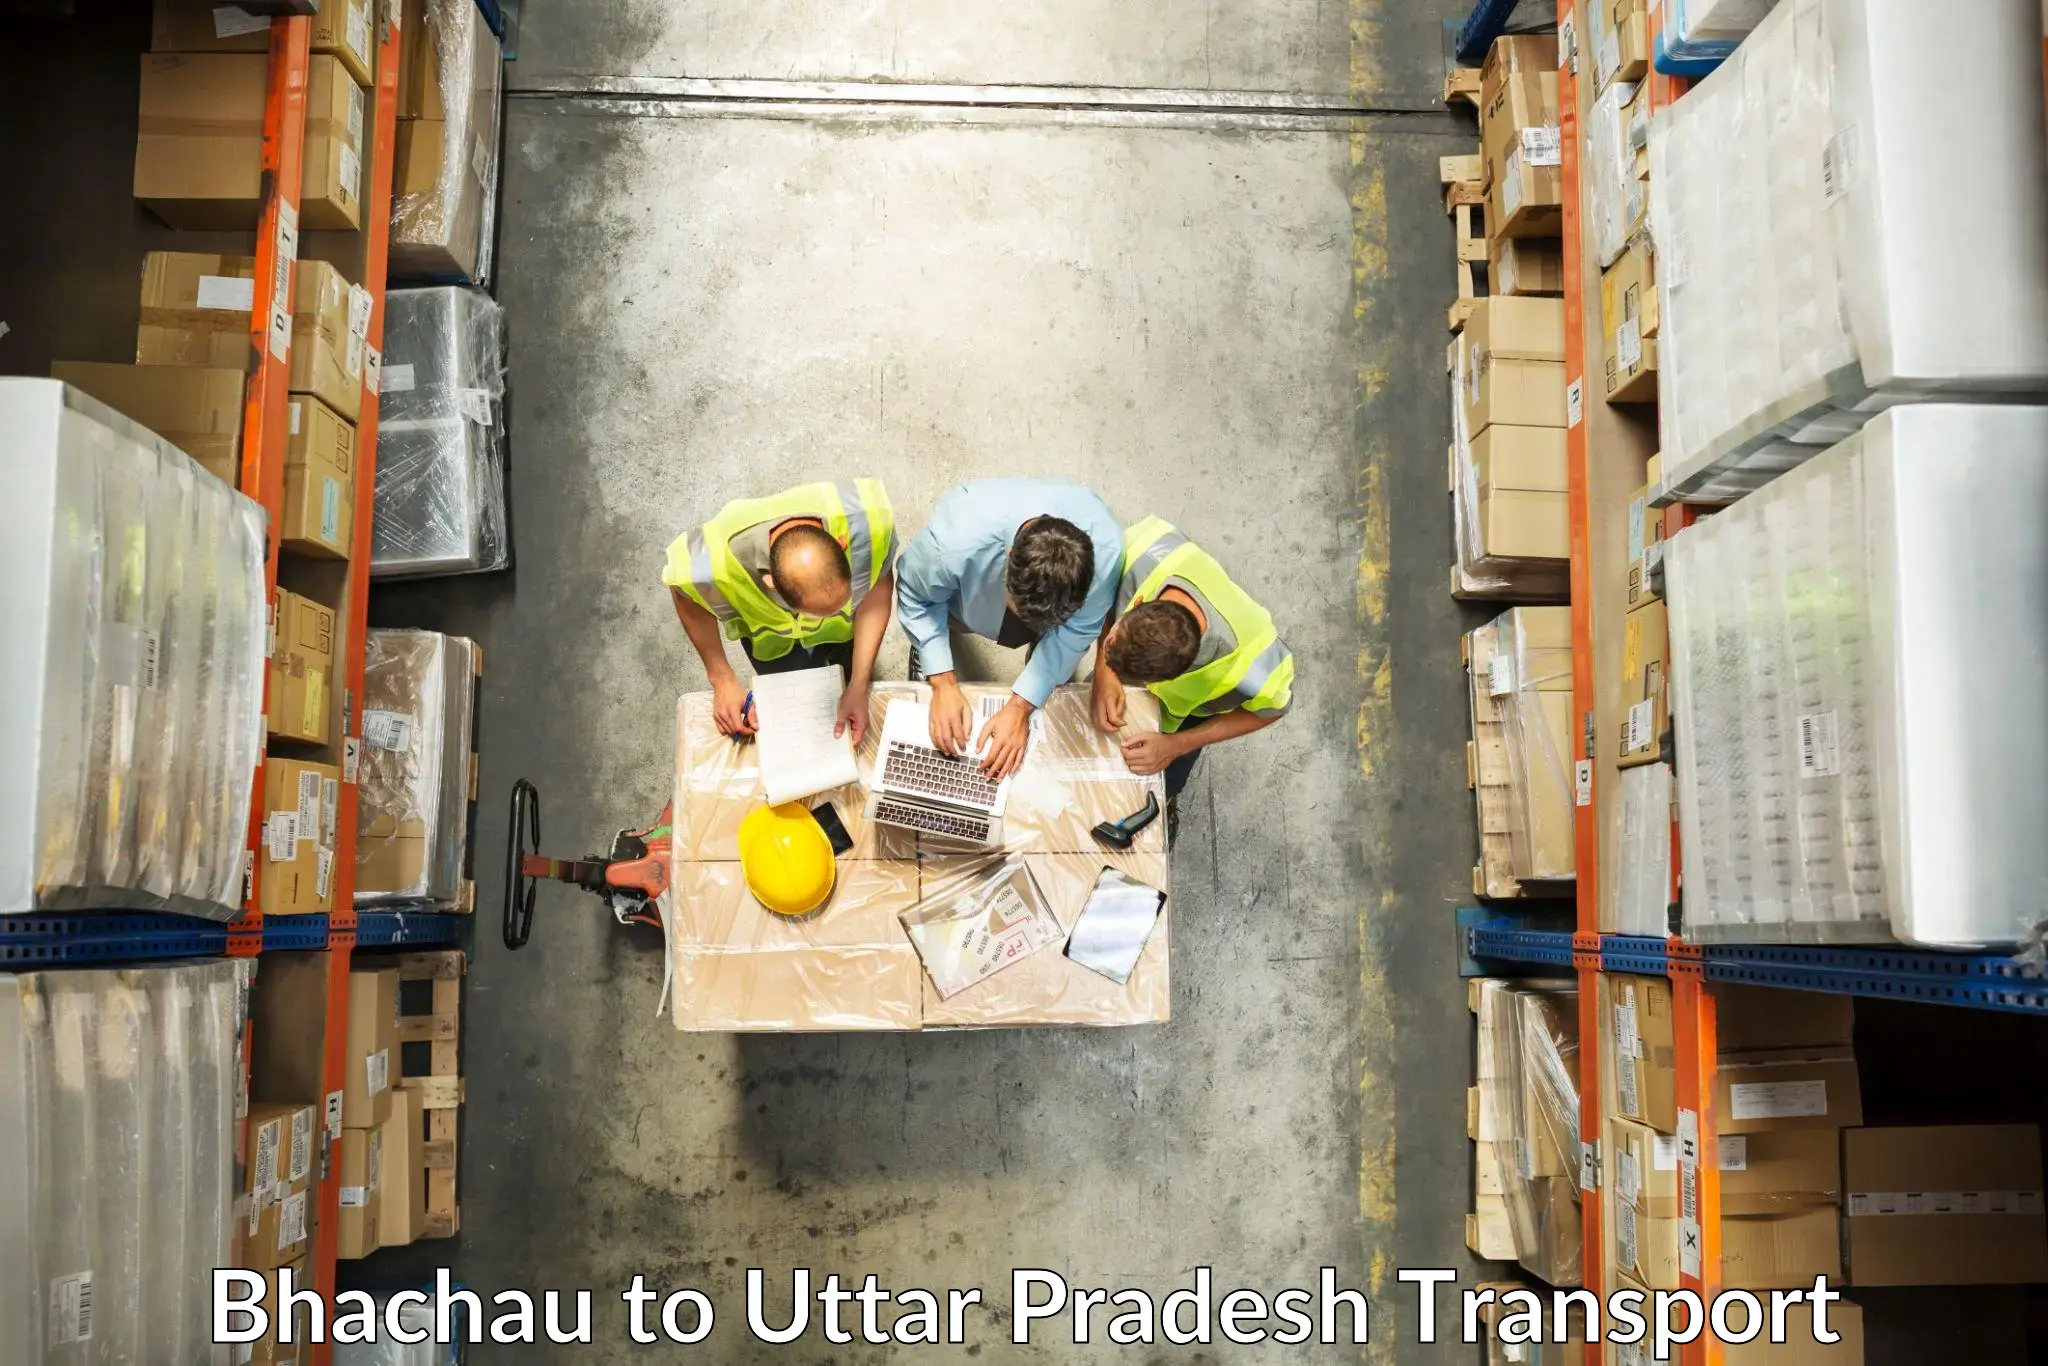 Part load transport service in India Bhachau to Gorakhpur